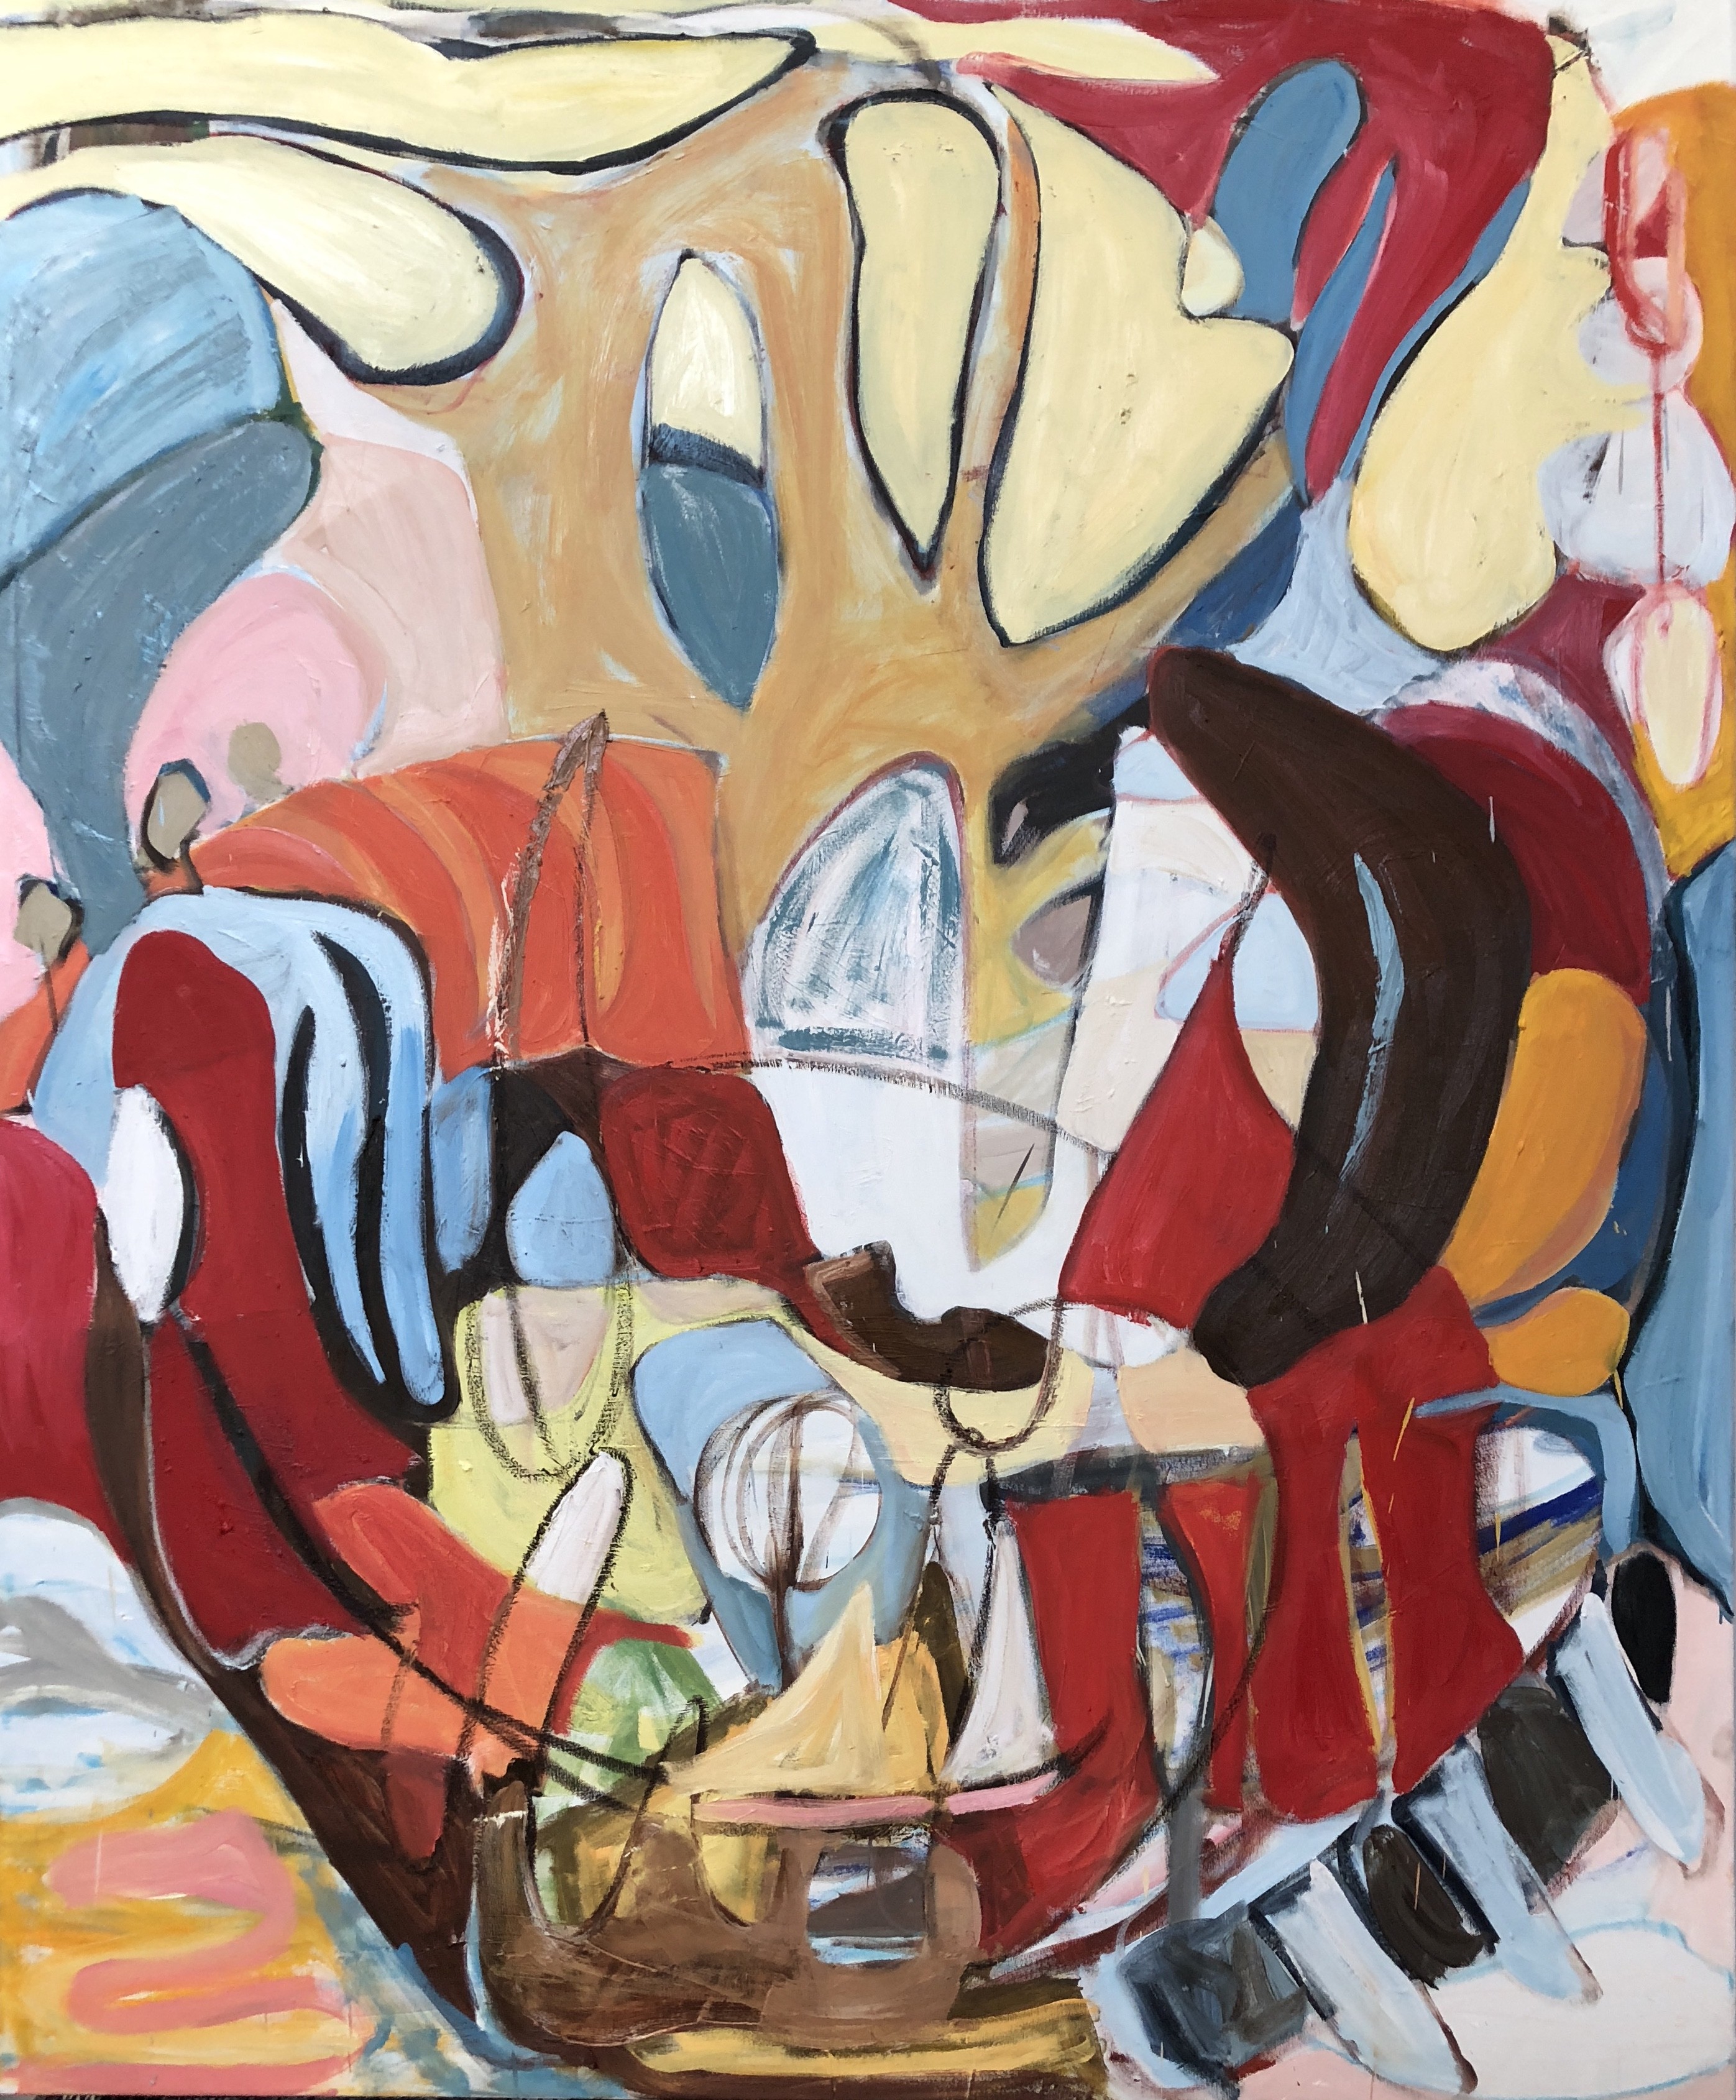 Gira Gira, oil on canvas, 72 x 60 inches, 2018